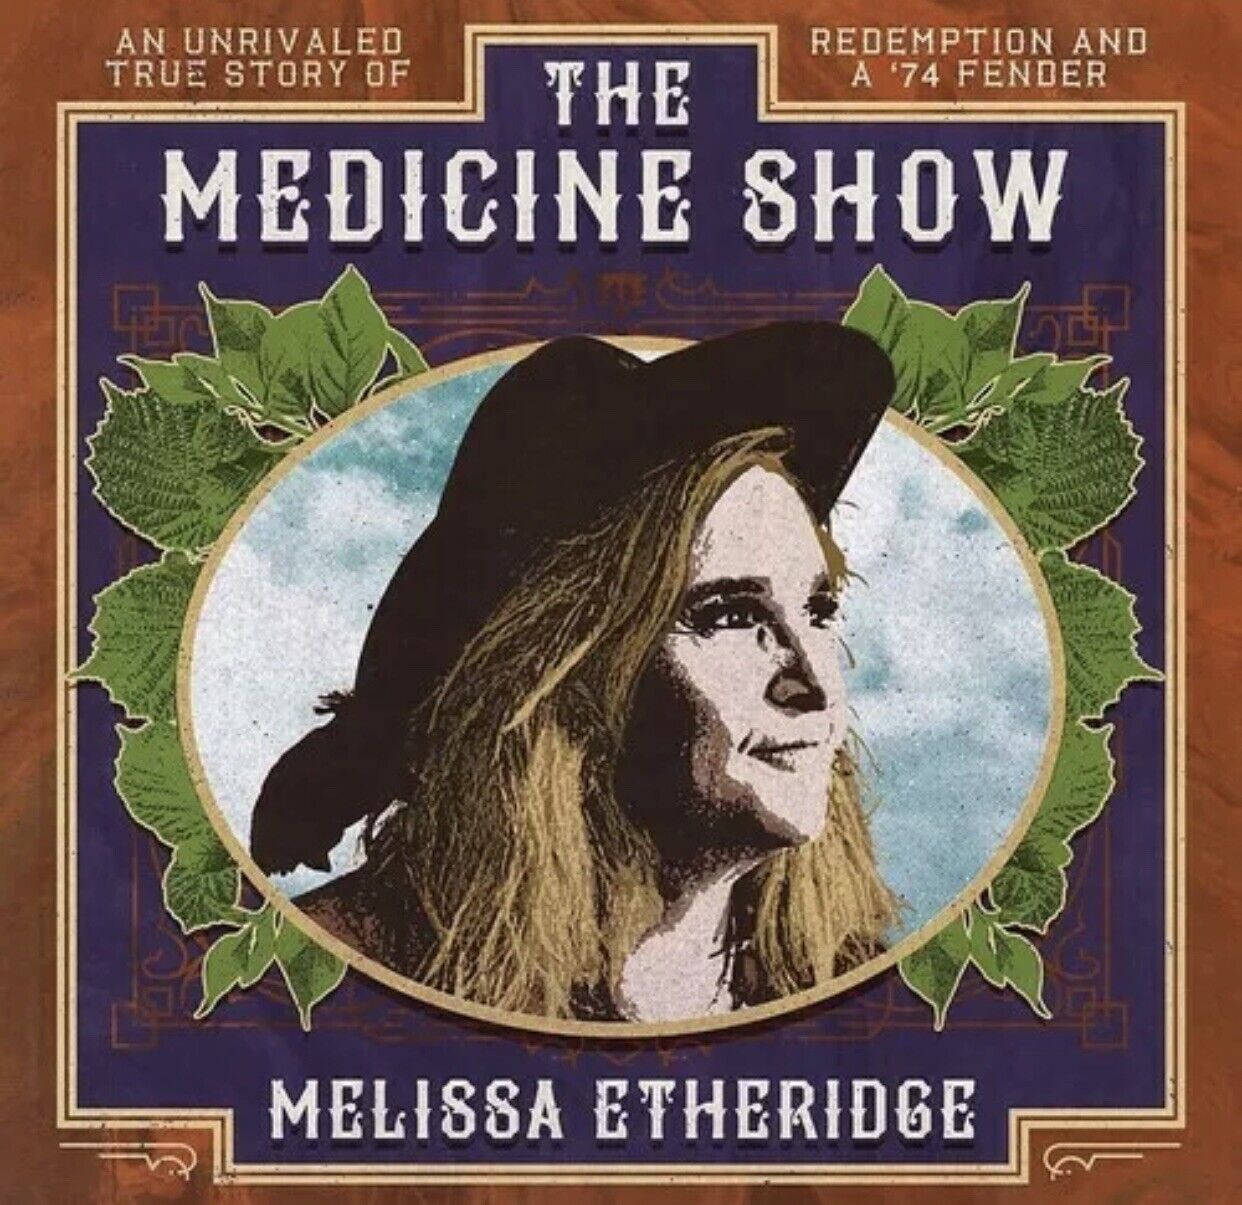 Melissa Etheridge – The Medicine Show LP